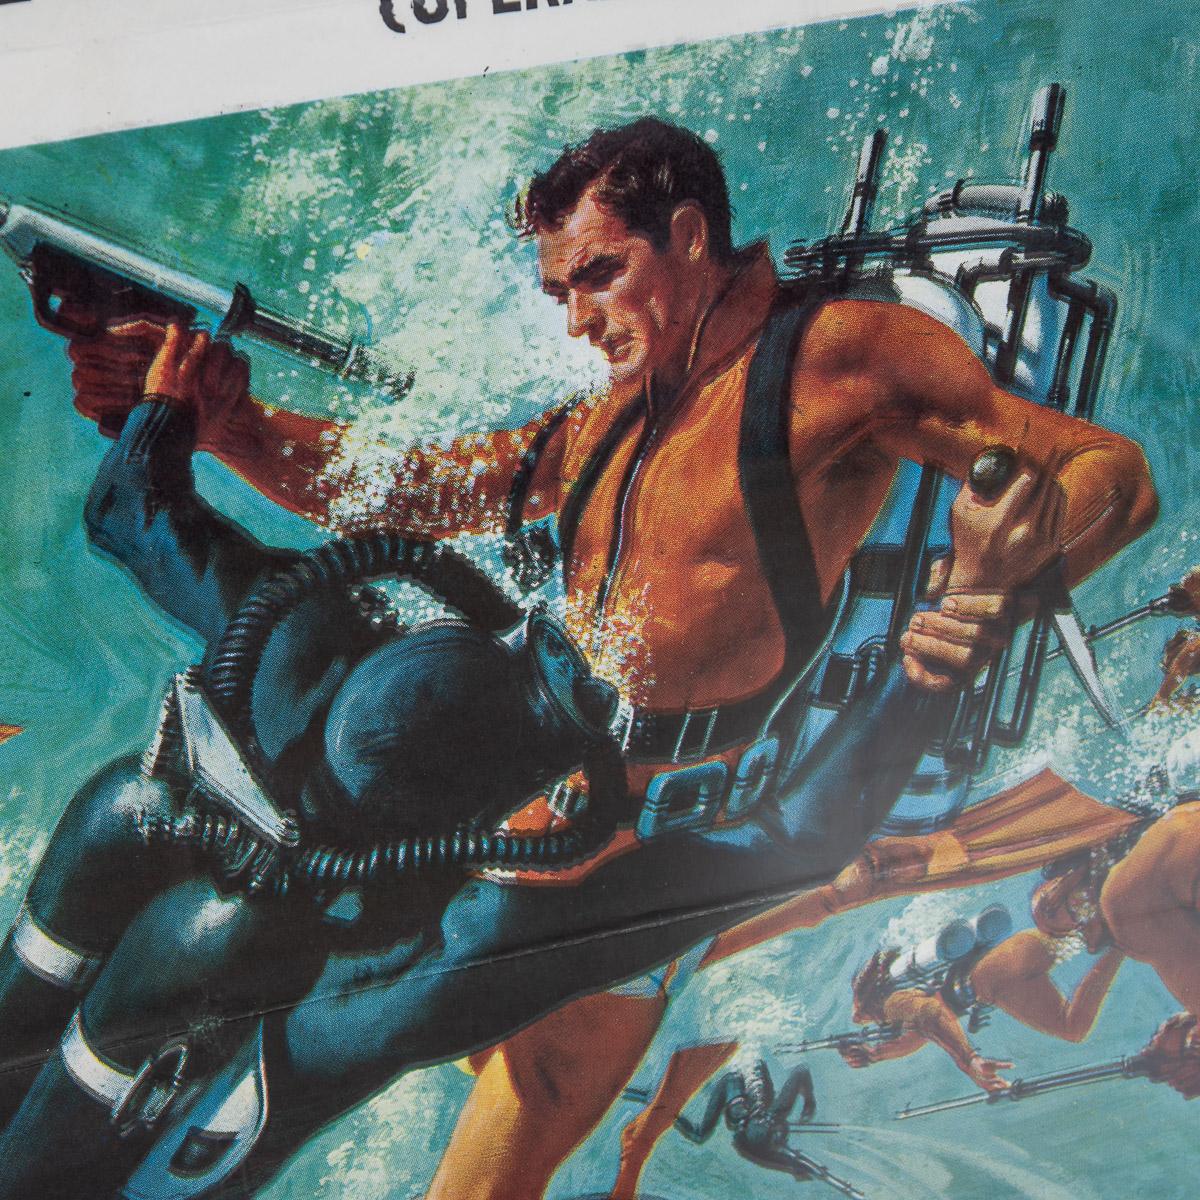 Original Italian Re-Release James Bond 'Thunderball' Poster, c.1971 For Sale 11